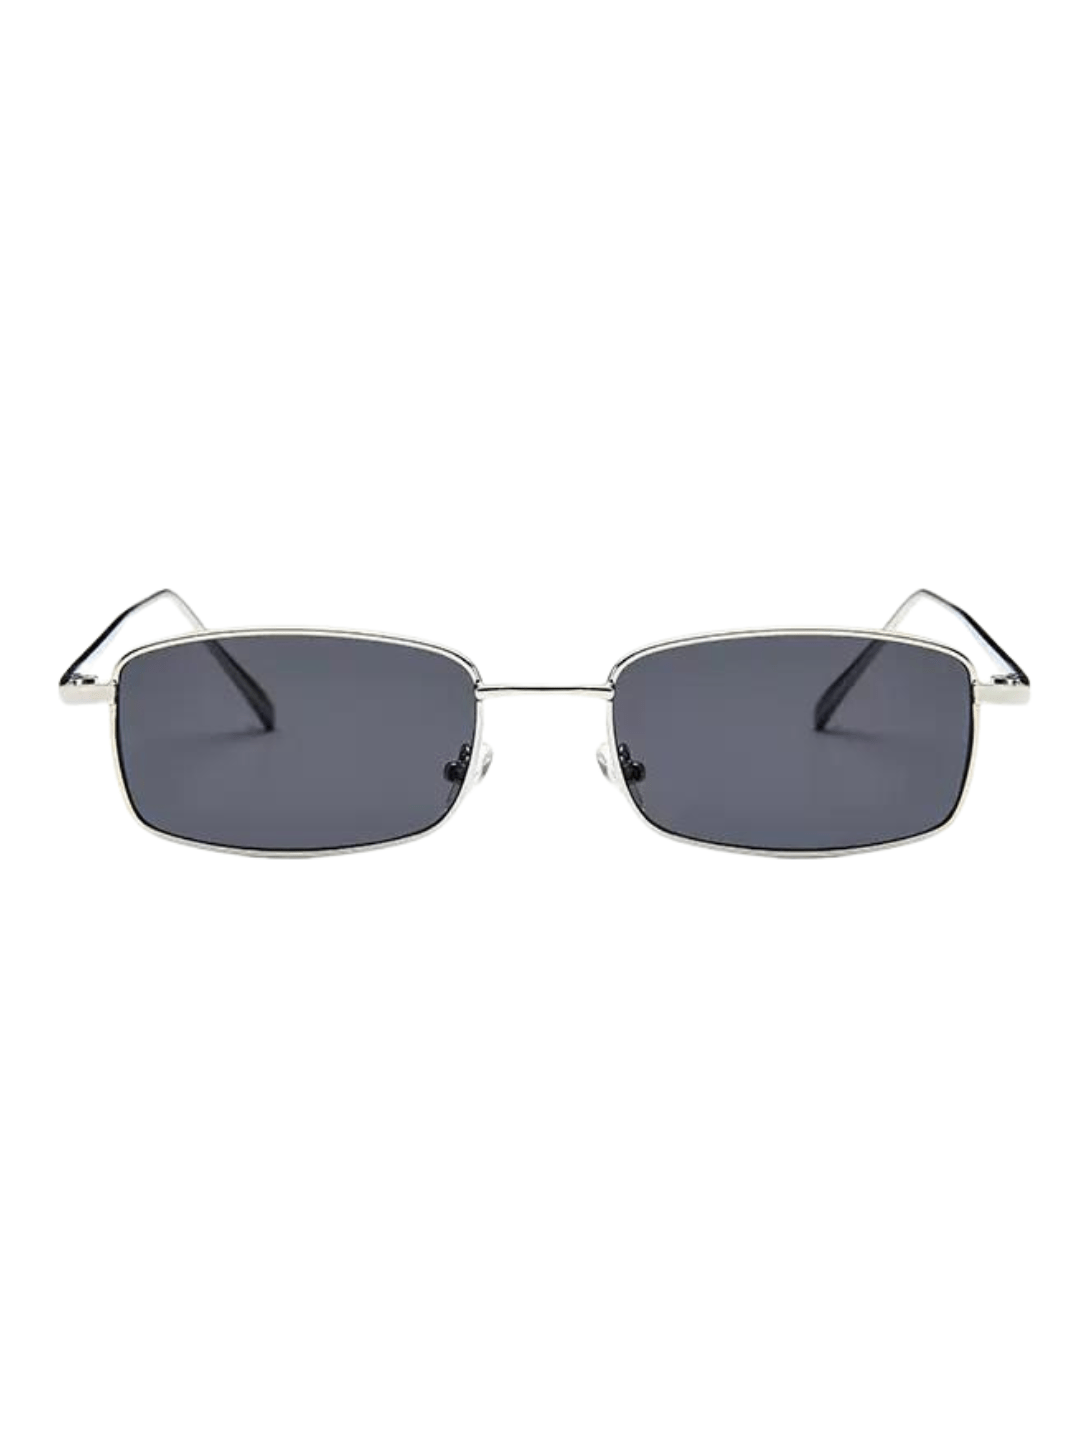 Metal Frames Sunglasses na1104